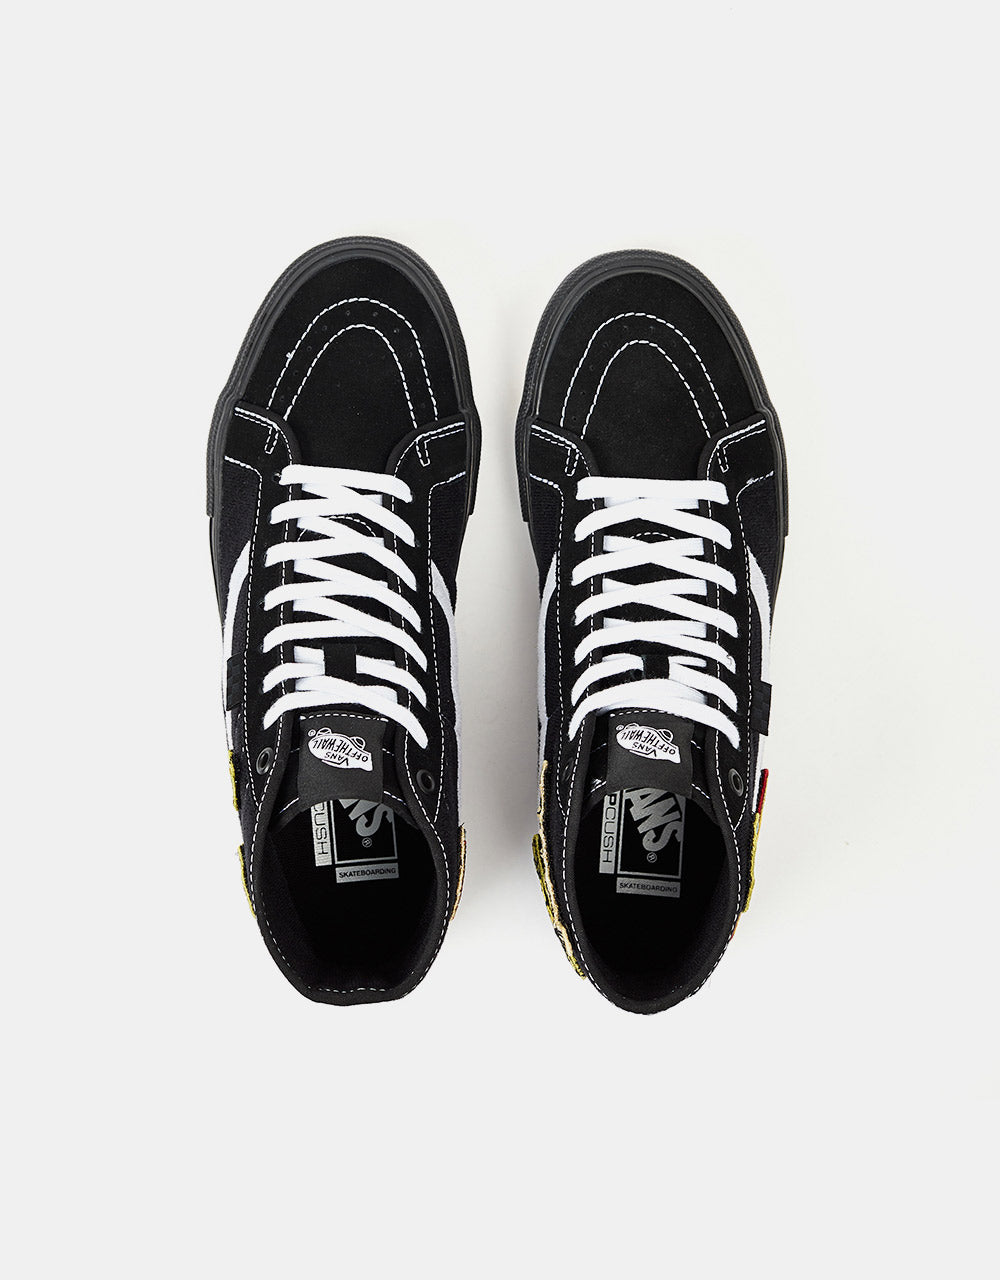 Vans Skate SK8-Hi Decon Shoes - (Elijah Berle) Black/Black